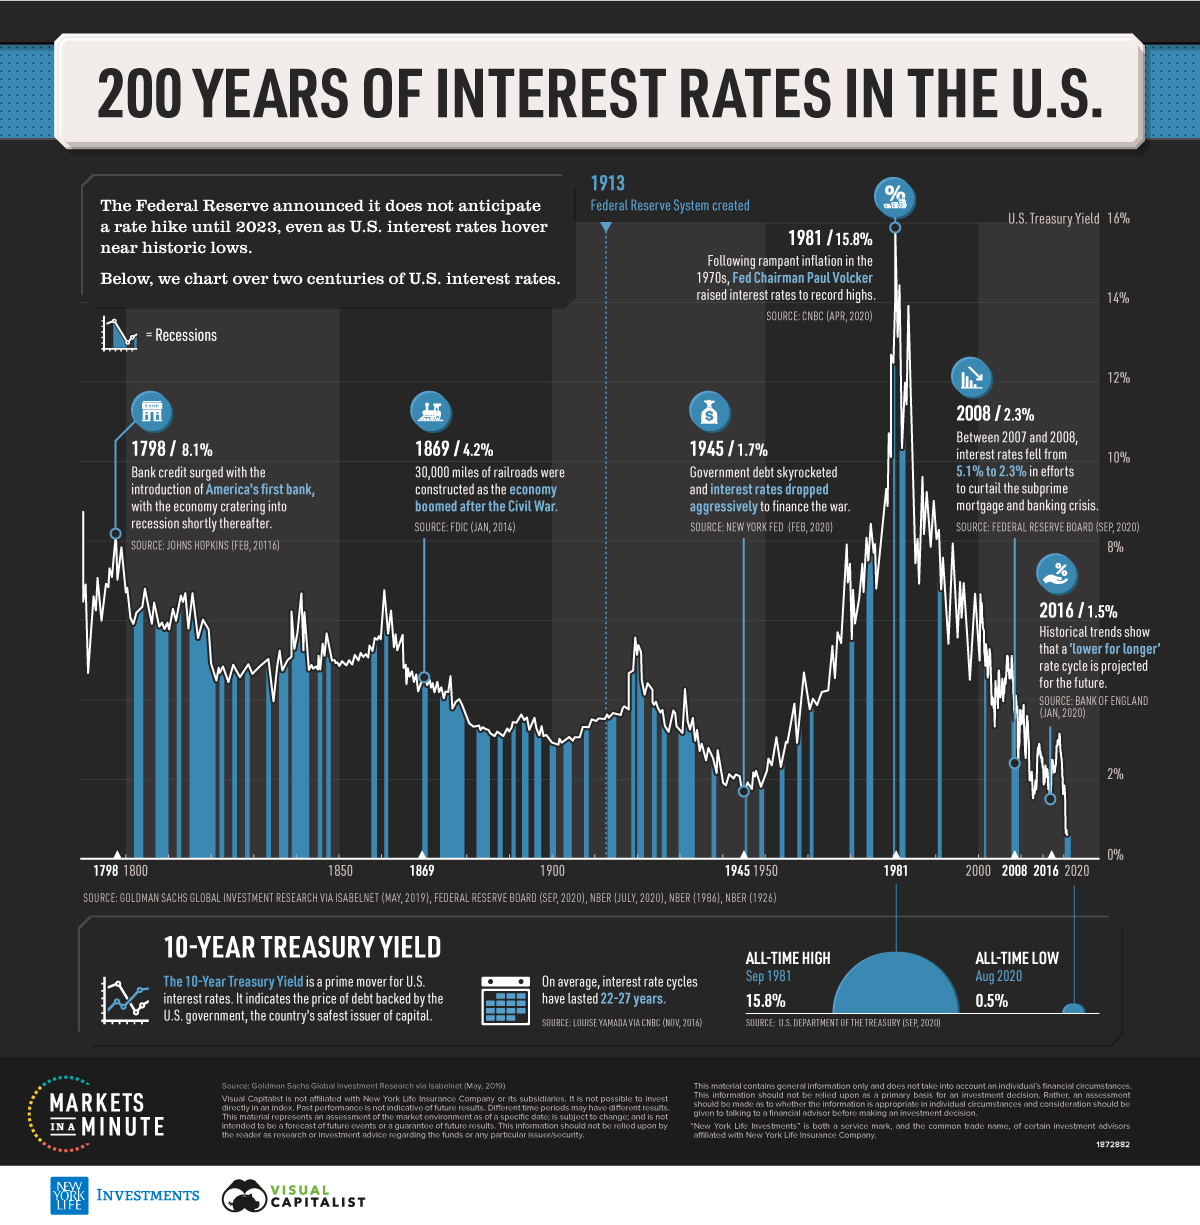 History of U.S. Interest Rates